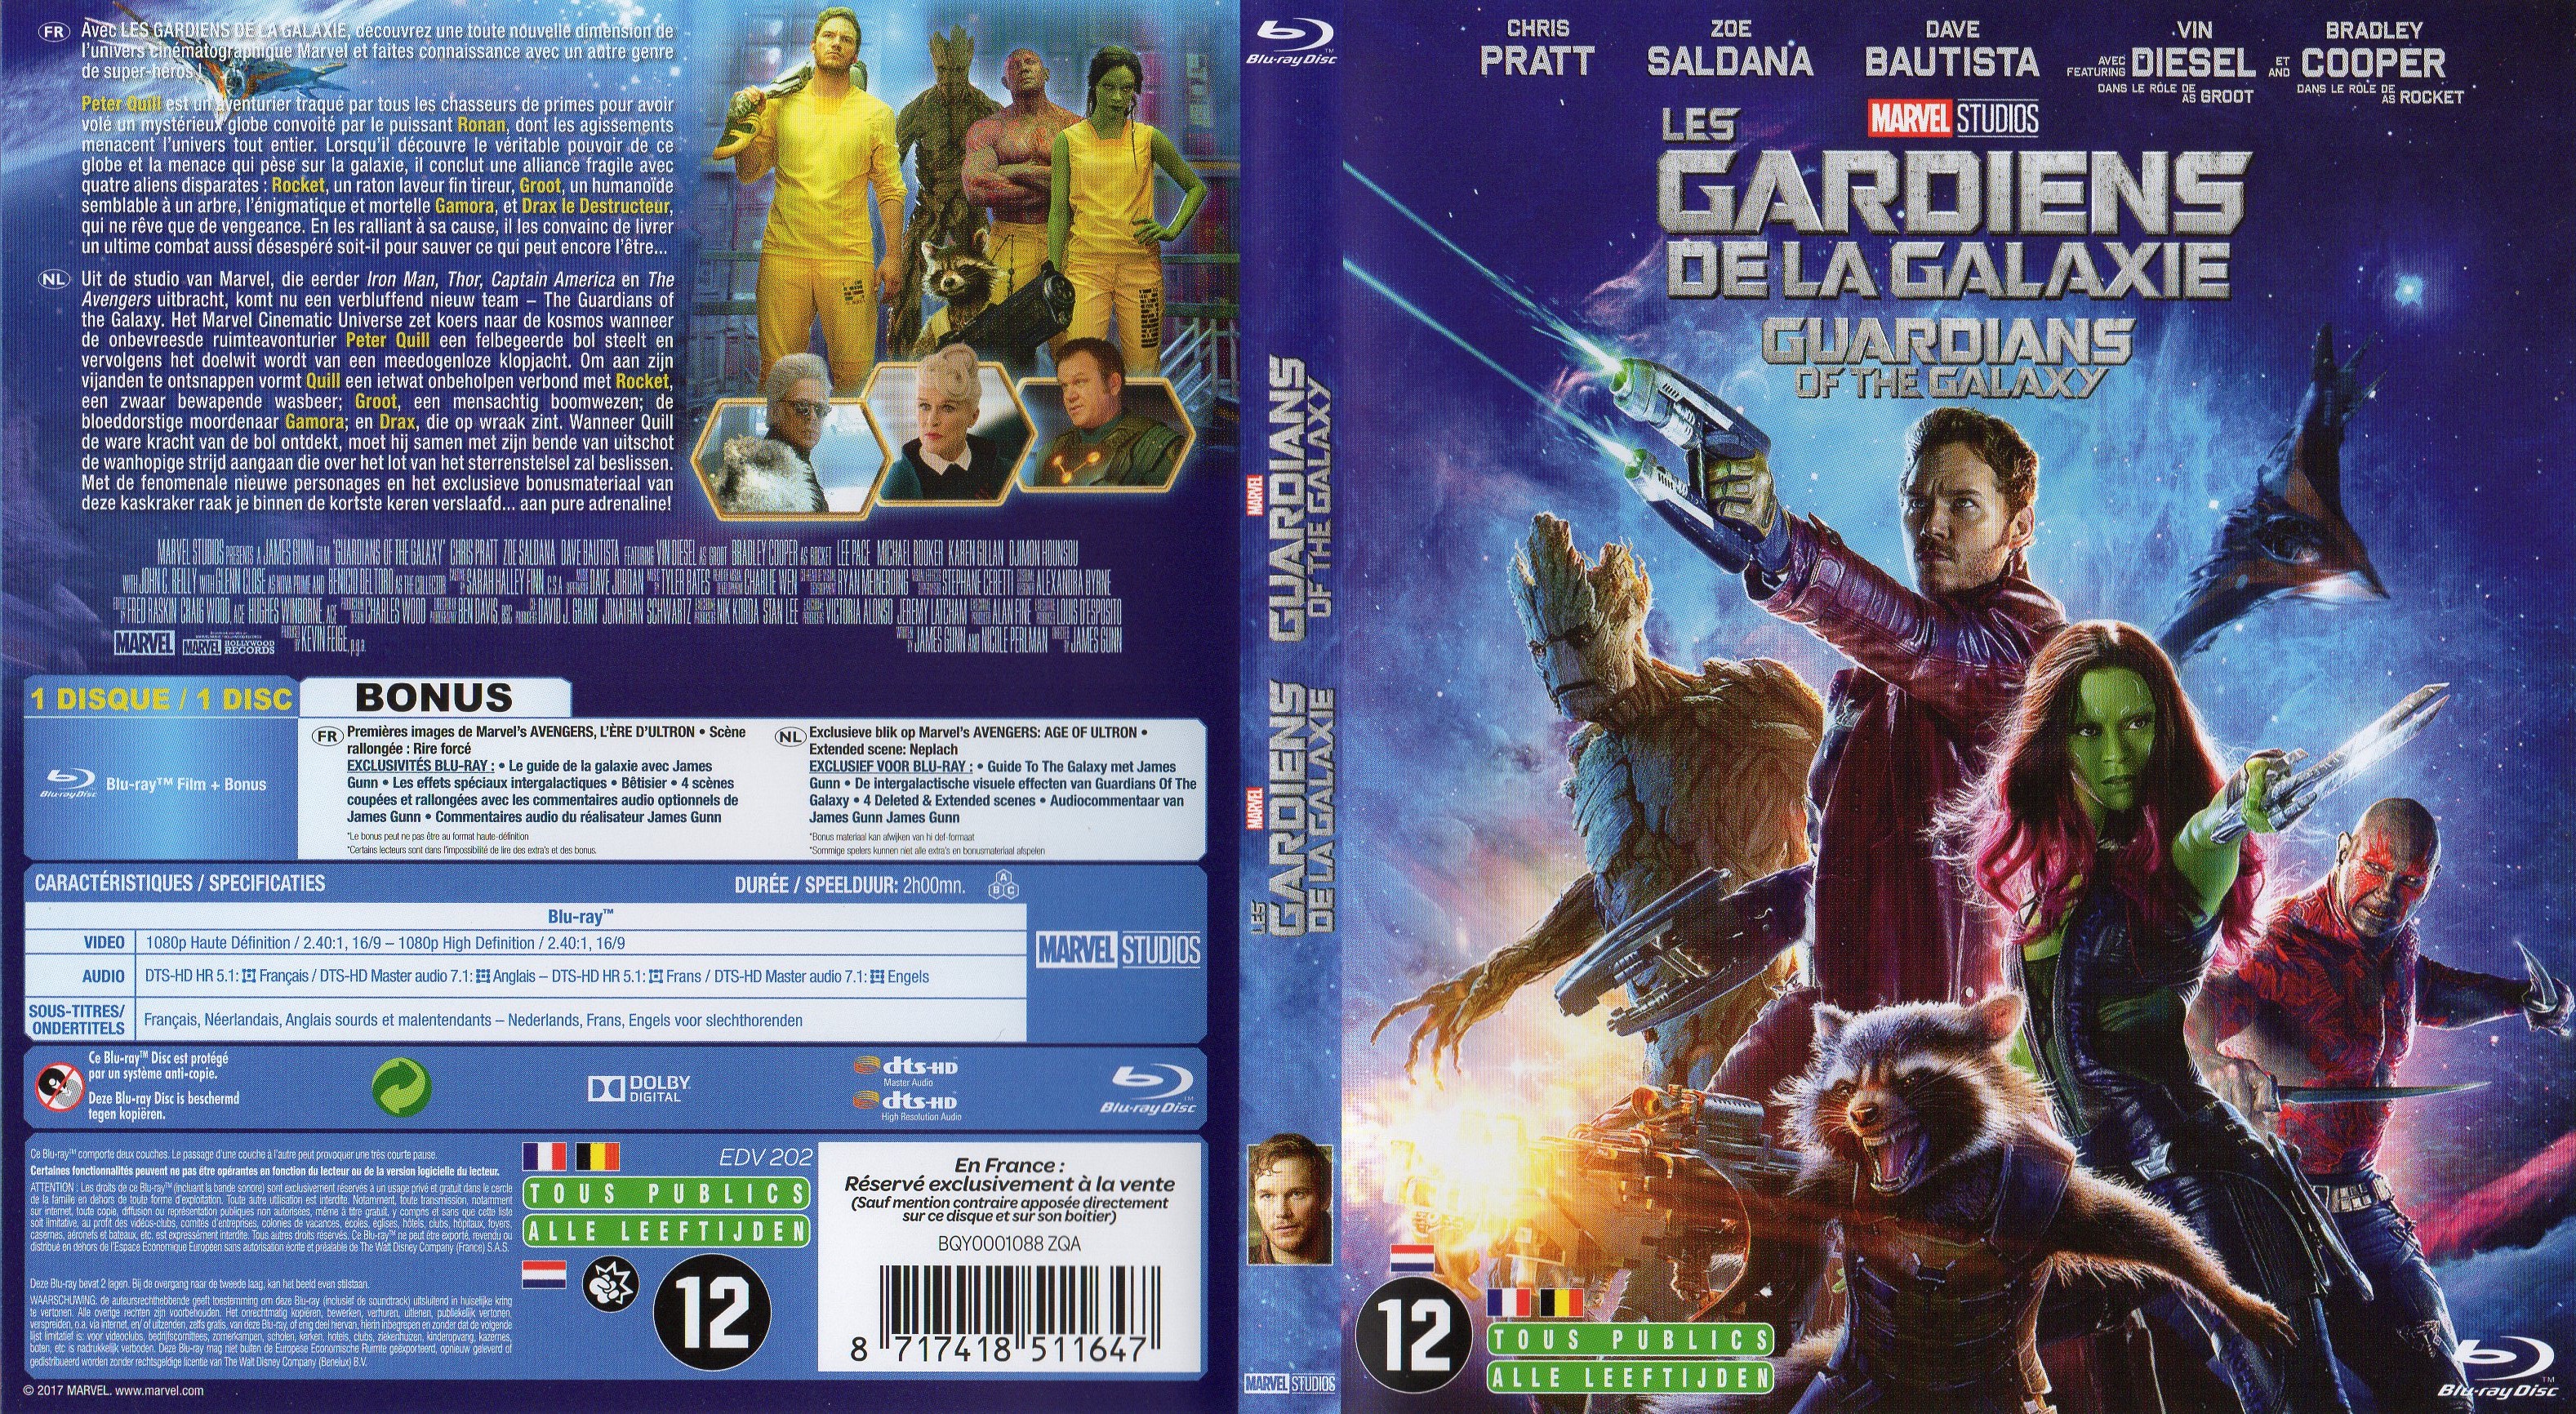 Jaquette DVD Les gardiens de la galaxie (BLU-RAY) v2